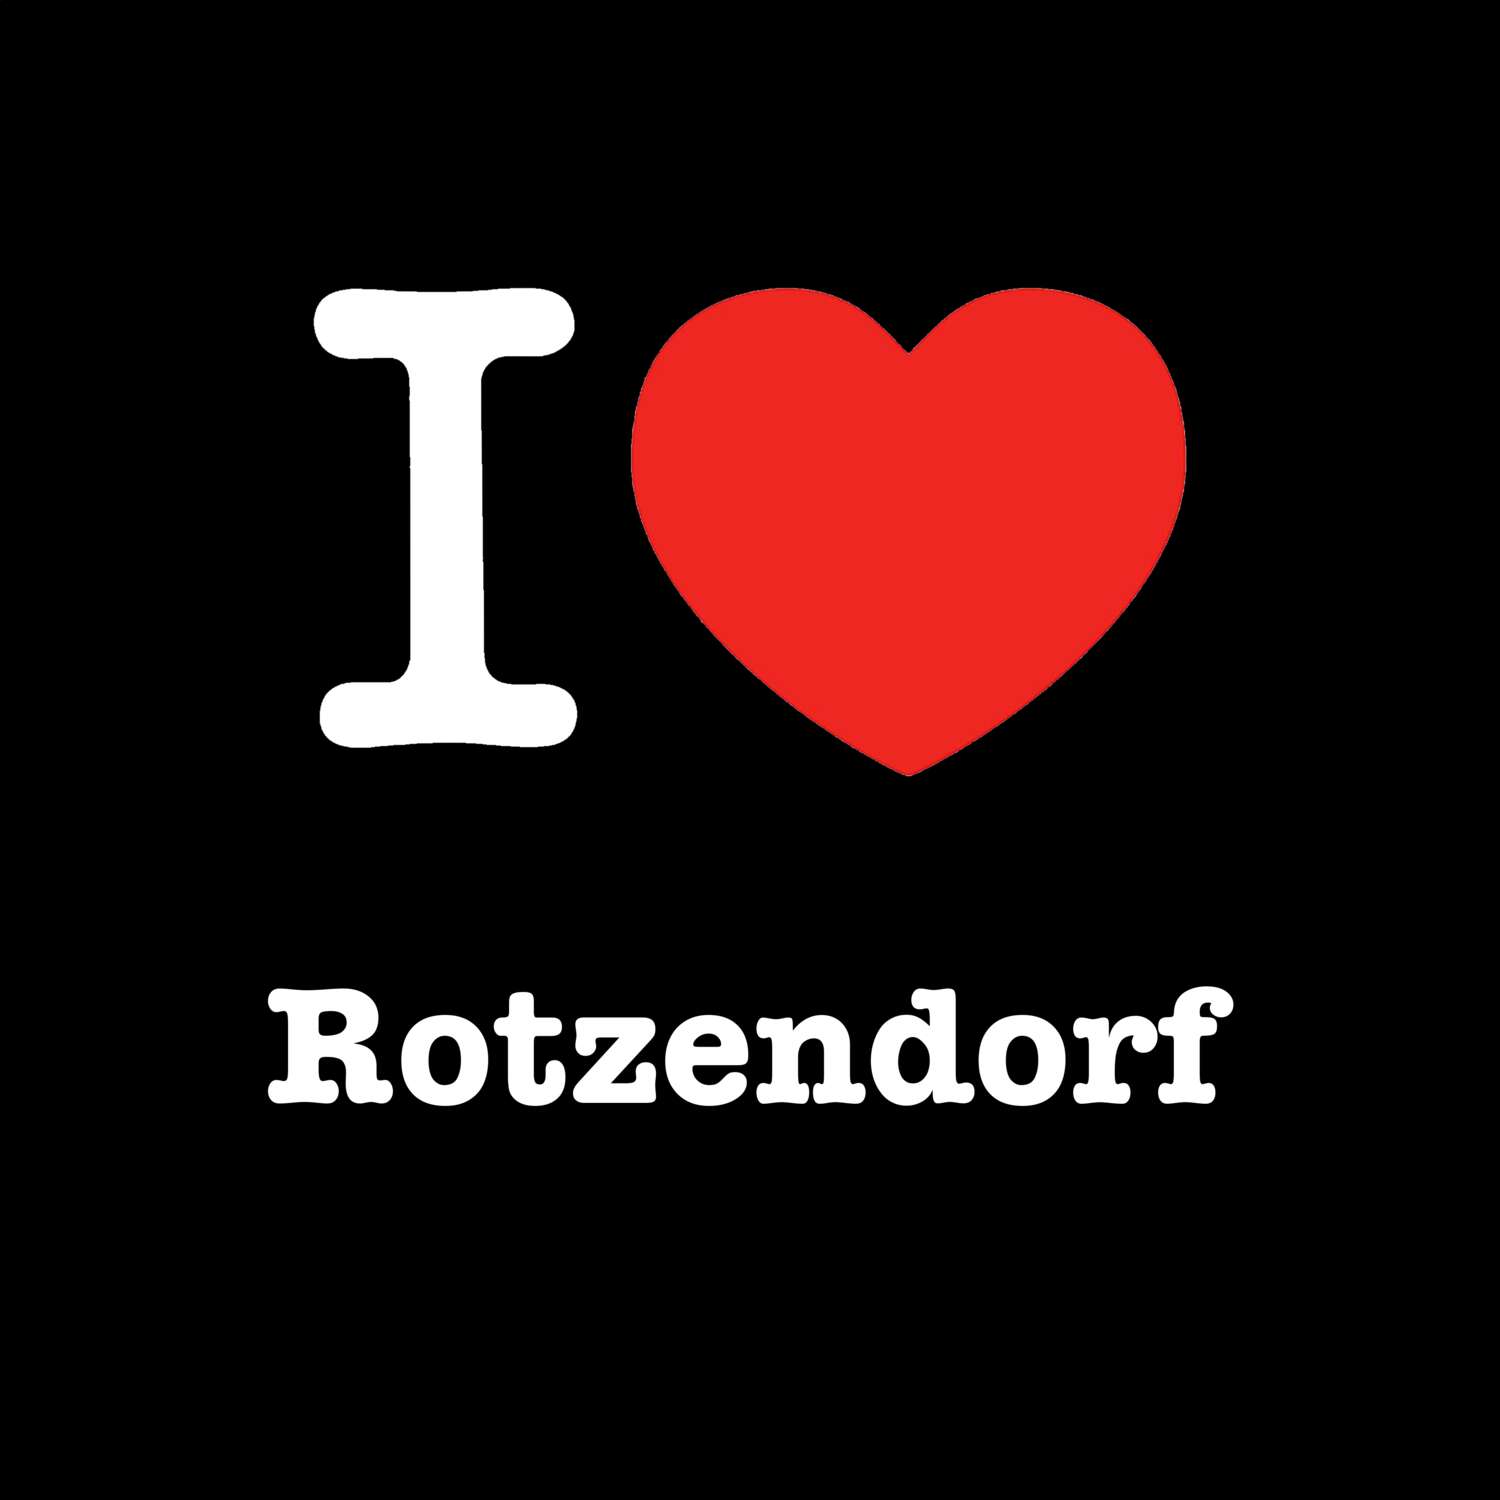 Rotzendorf T-Shirt »I love«